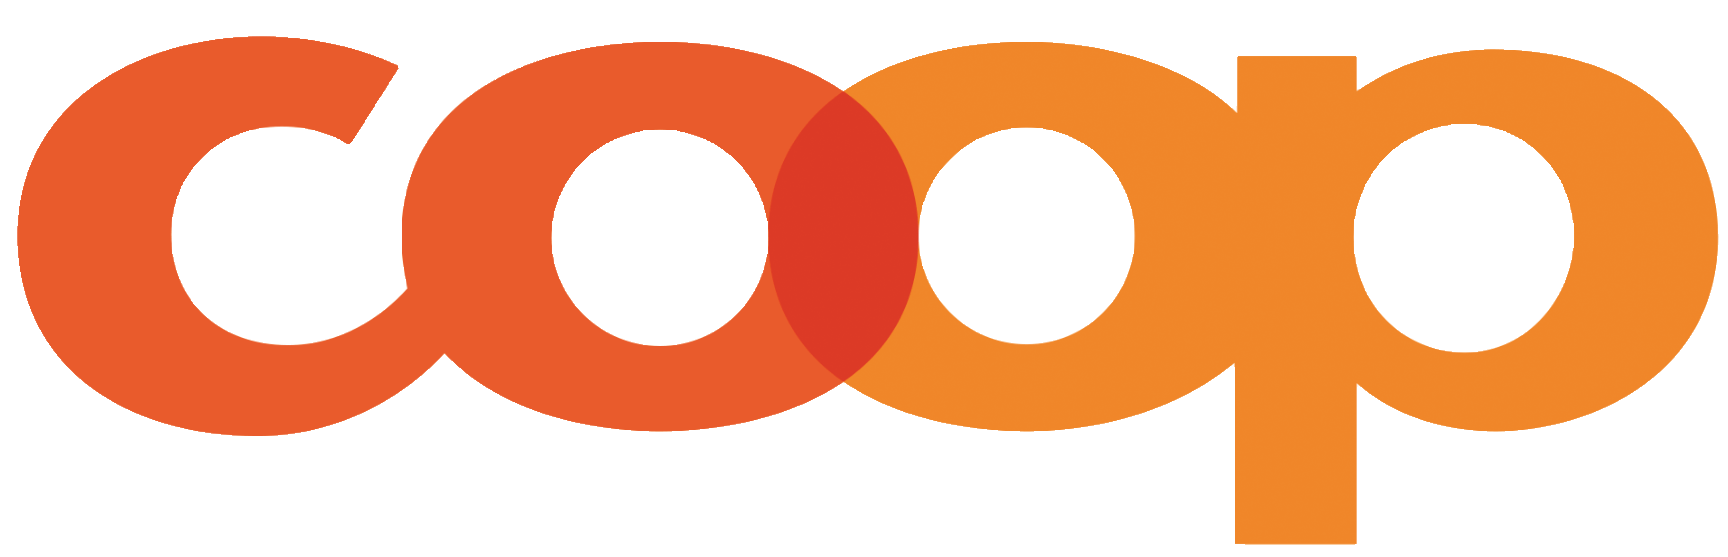 logo: coop